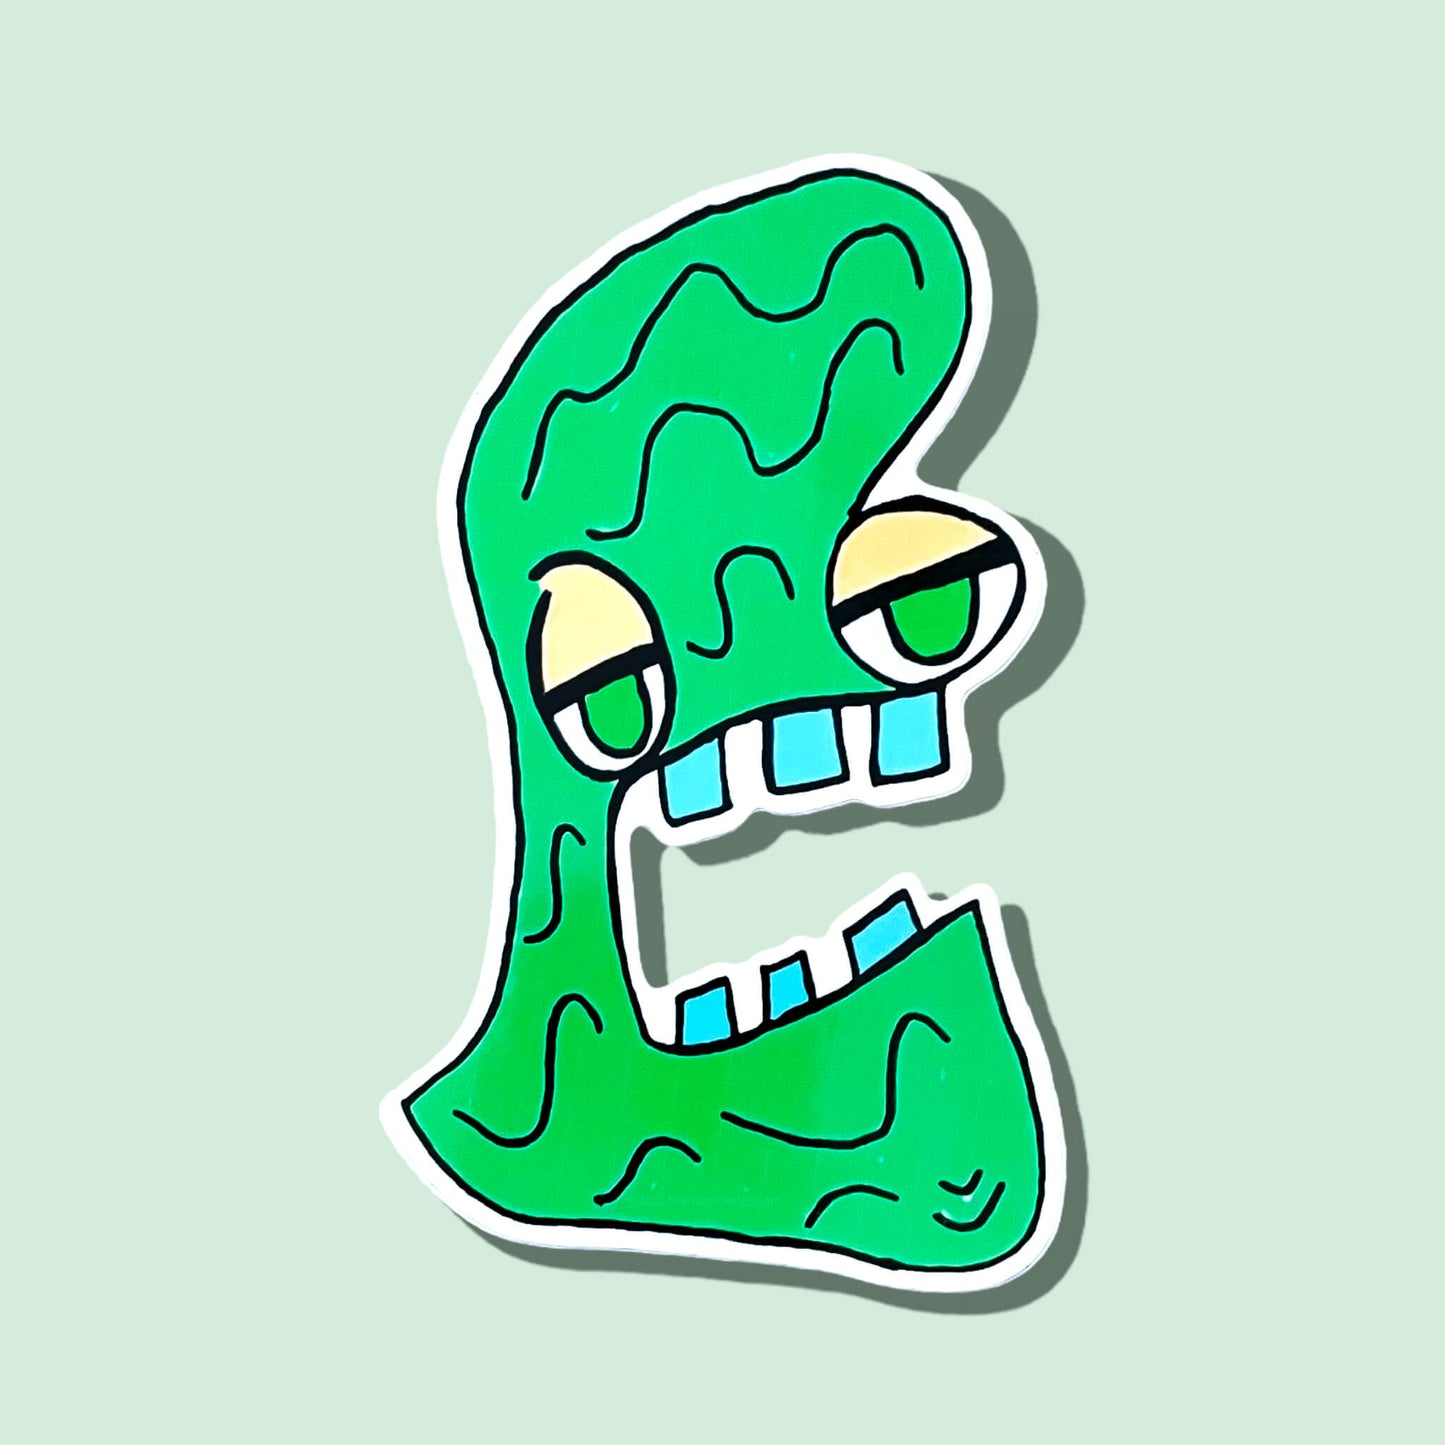 Cara de monstruo verde - Pegatina